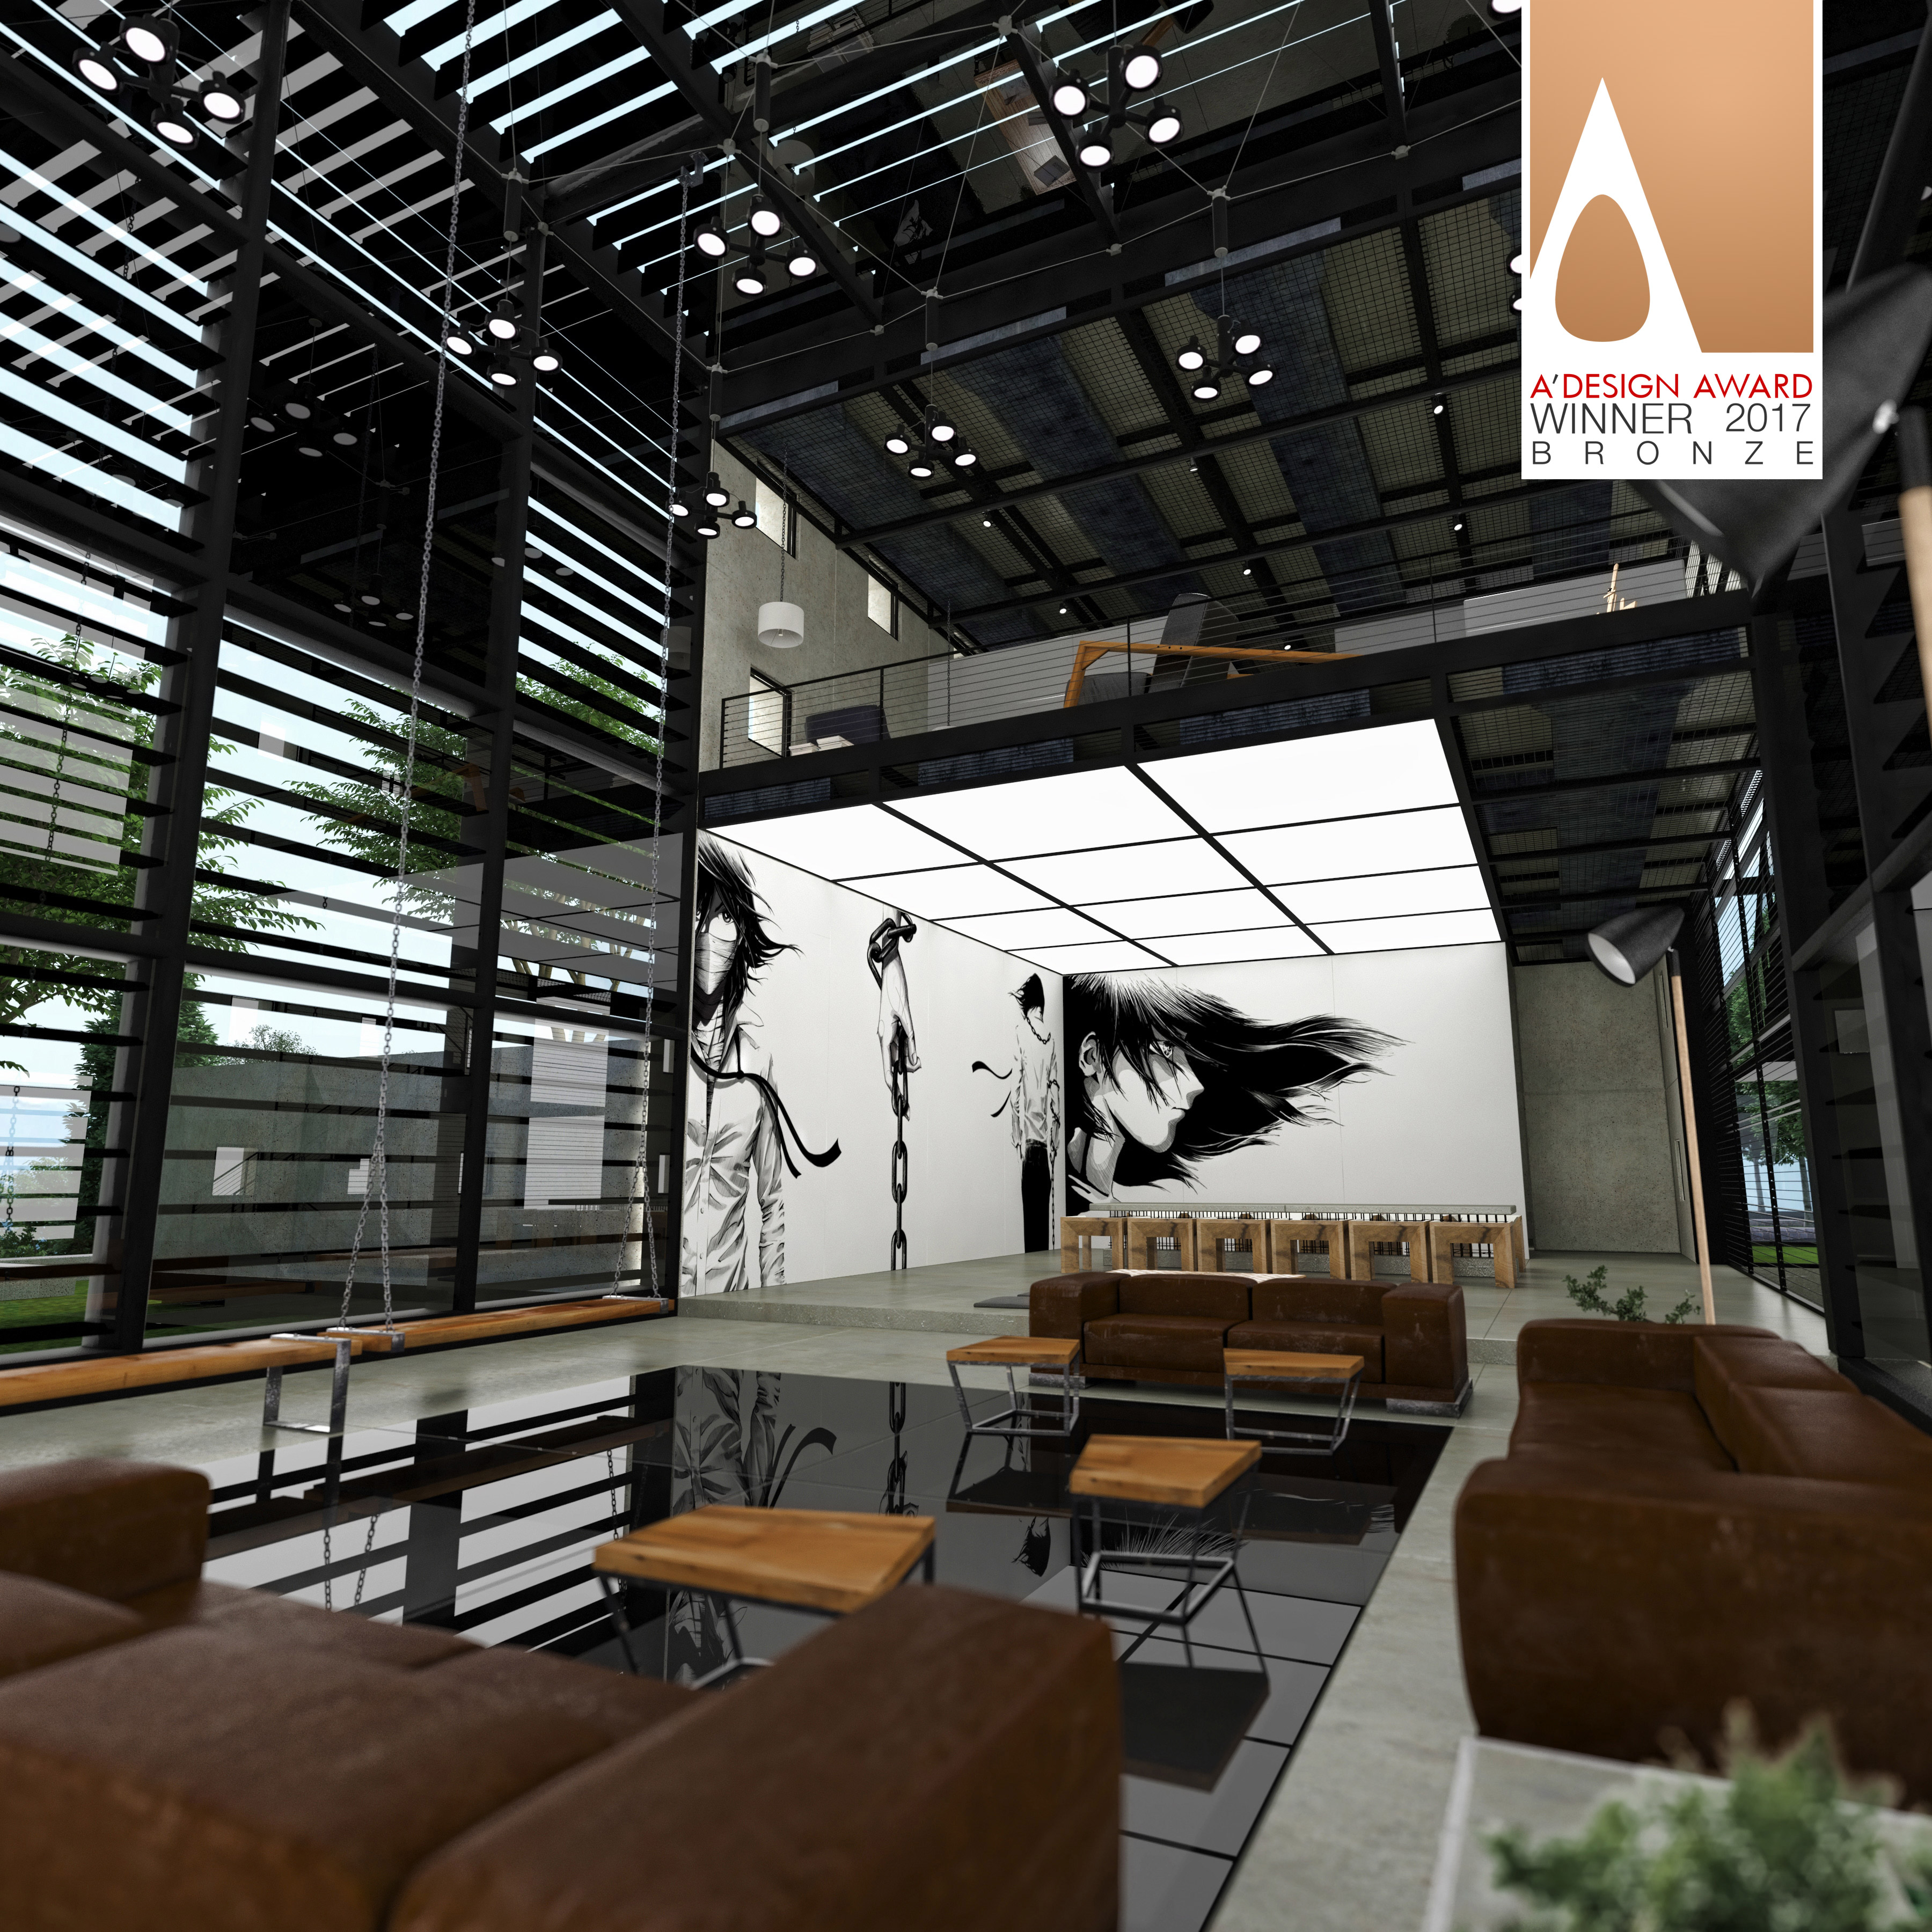 Interior Space of 'Aperture' 2017 bronze A'design award winner by Inkrypted's Gaby el Ashkar